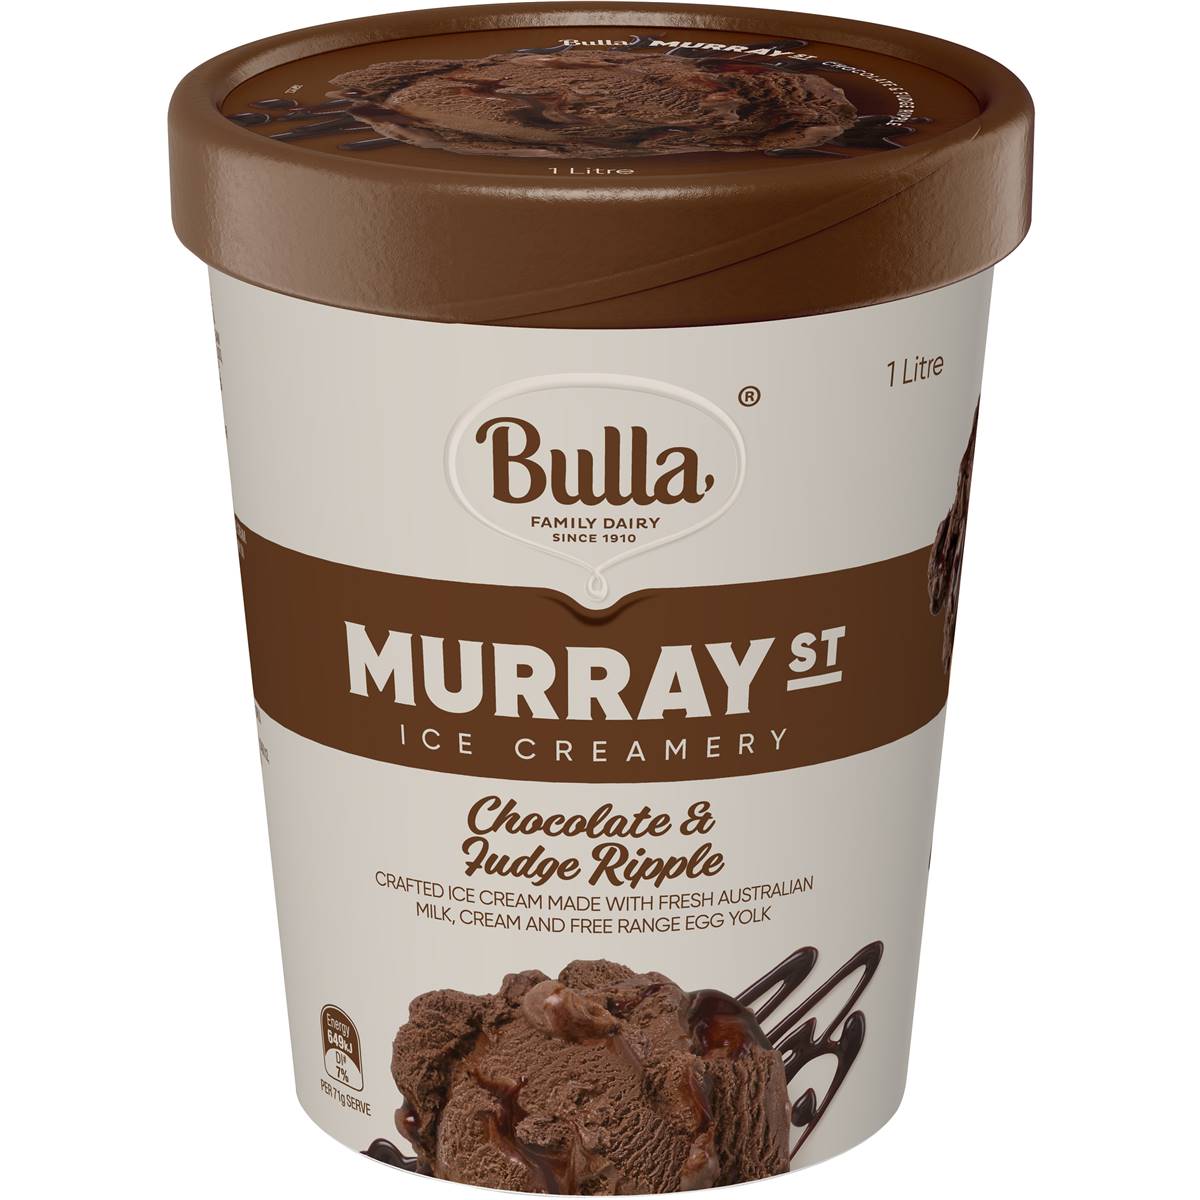 Bulla Murray St Ice Cream Chocolate & Fudge Ripple 1L